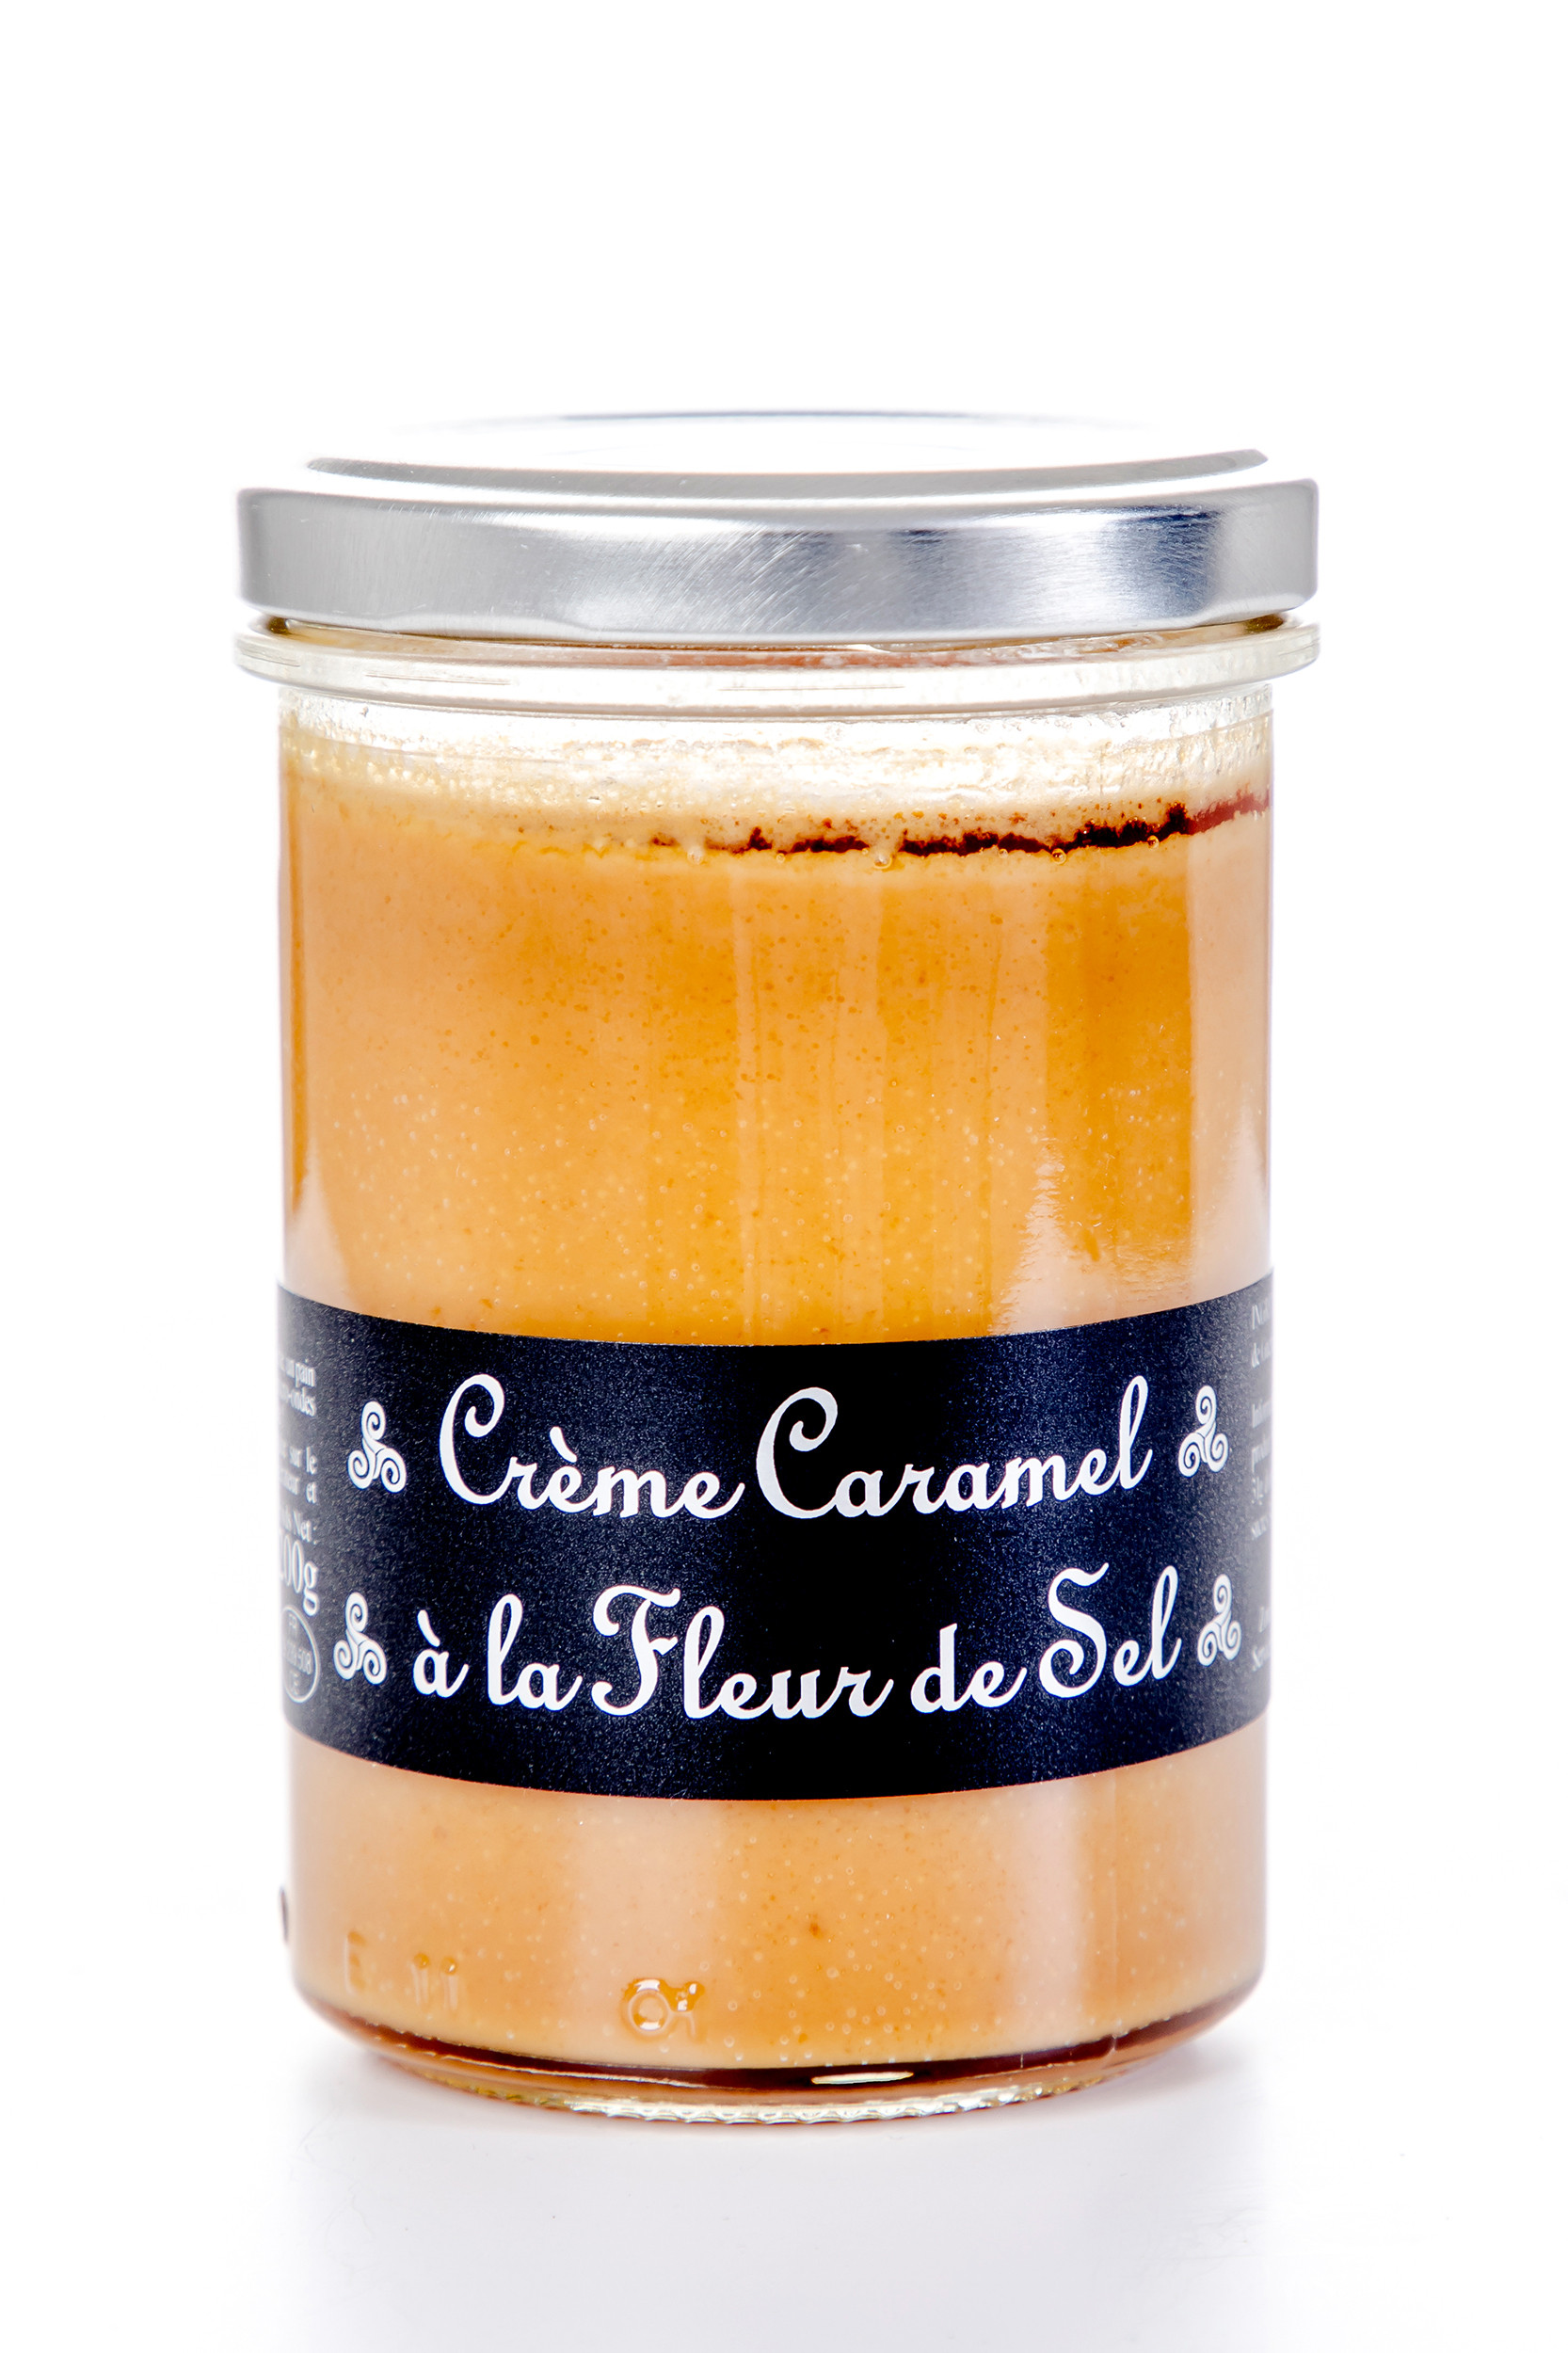 Grossiste Alsa Sauce Caramel Liquide 1kg